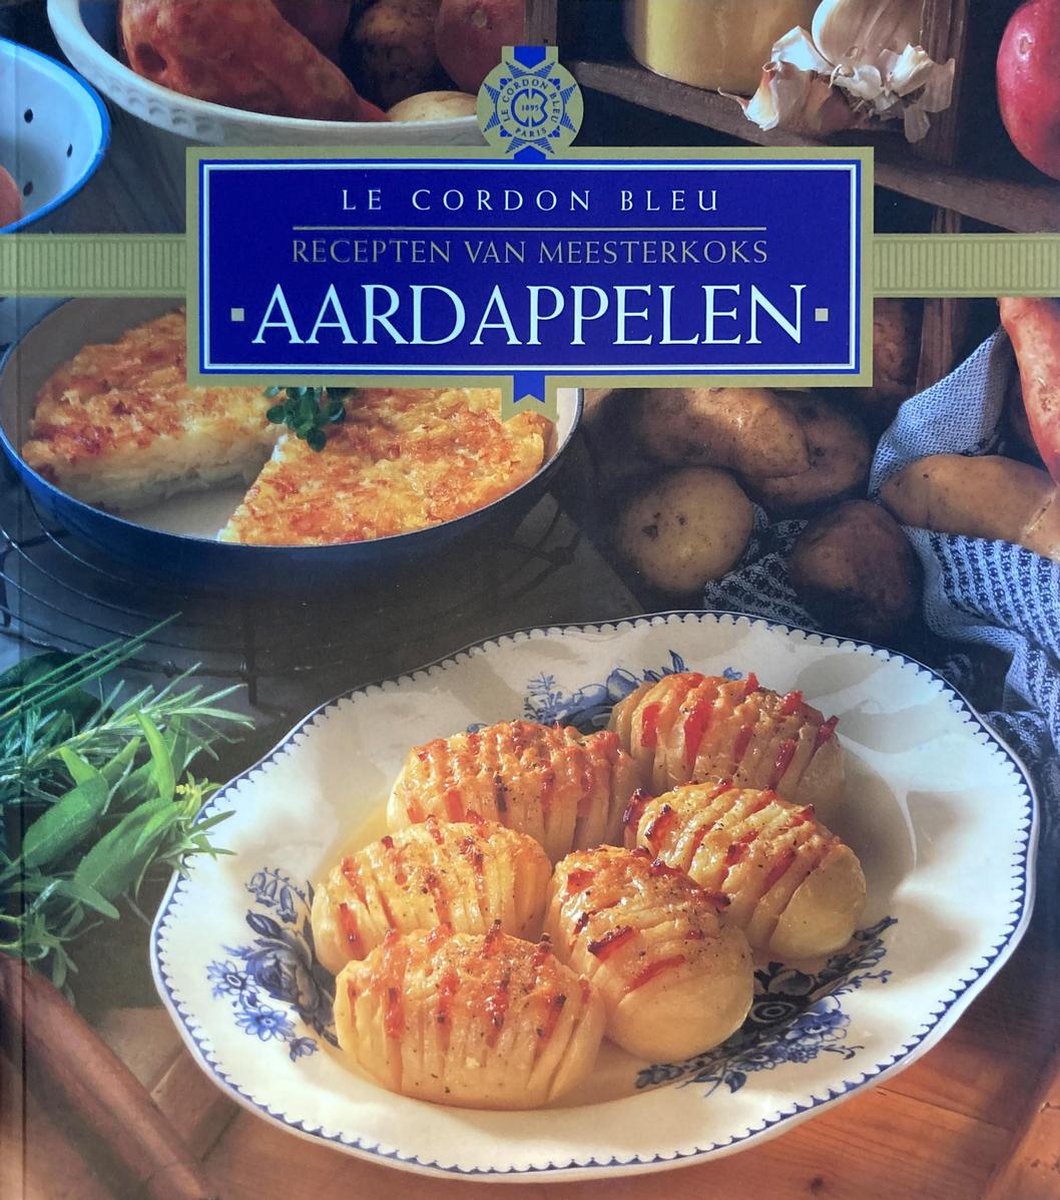 Le Cordon bleu - aardappelen - Daphne